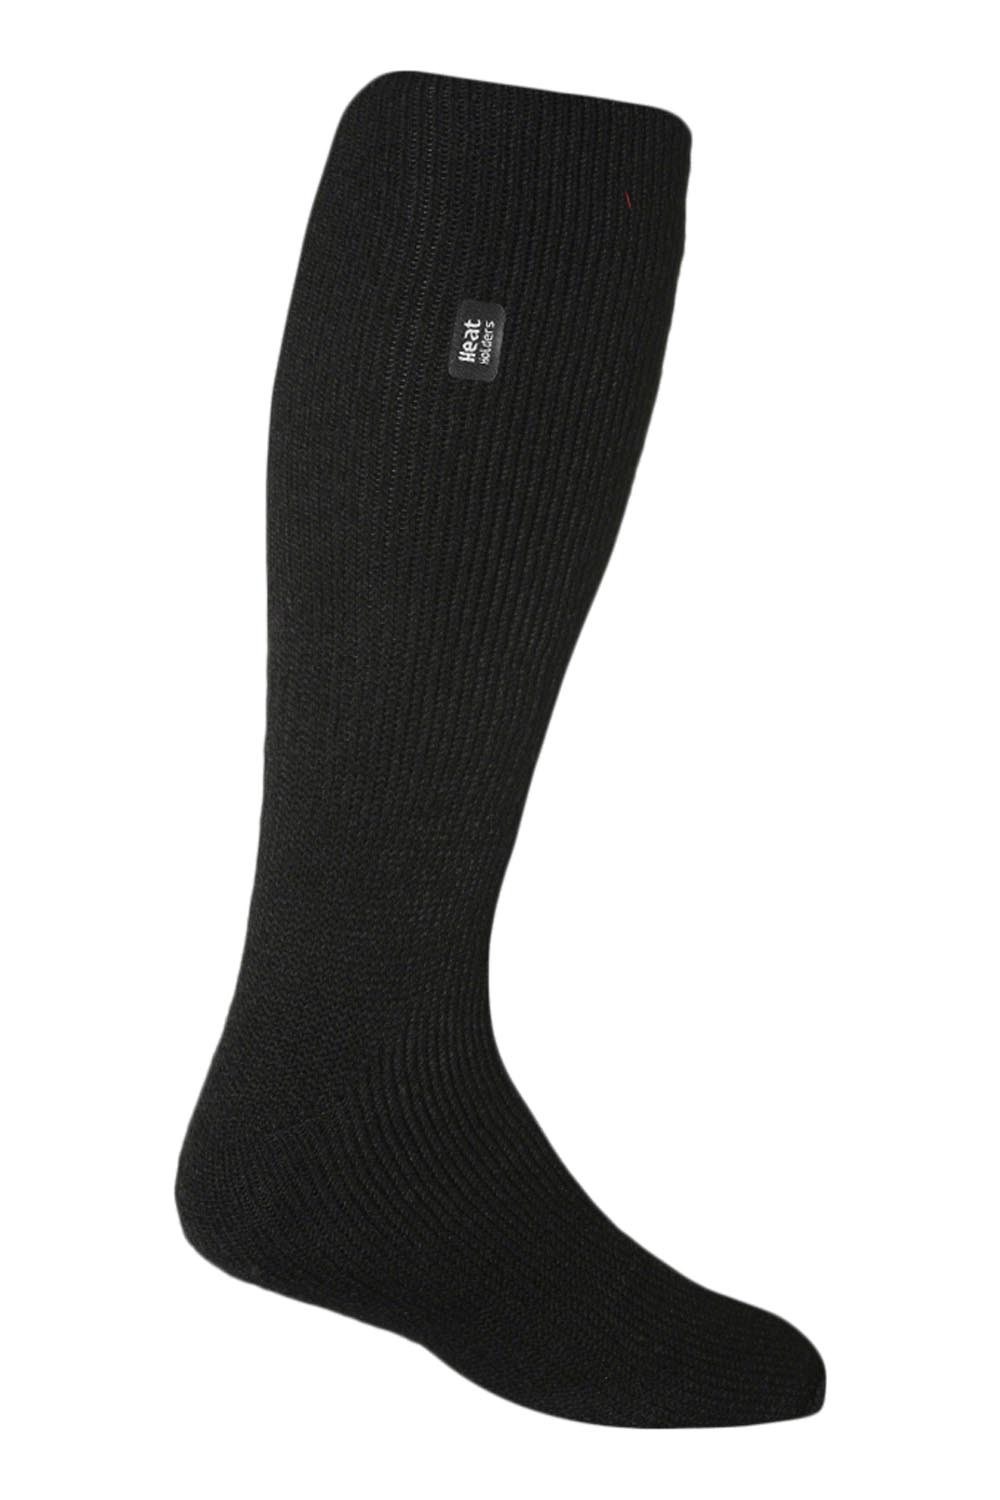 Mens Extra Long Thermal Socks